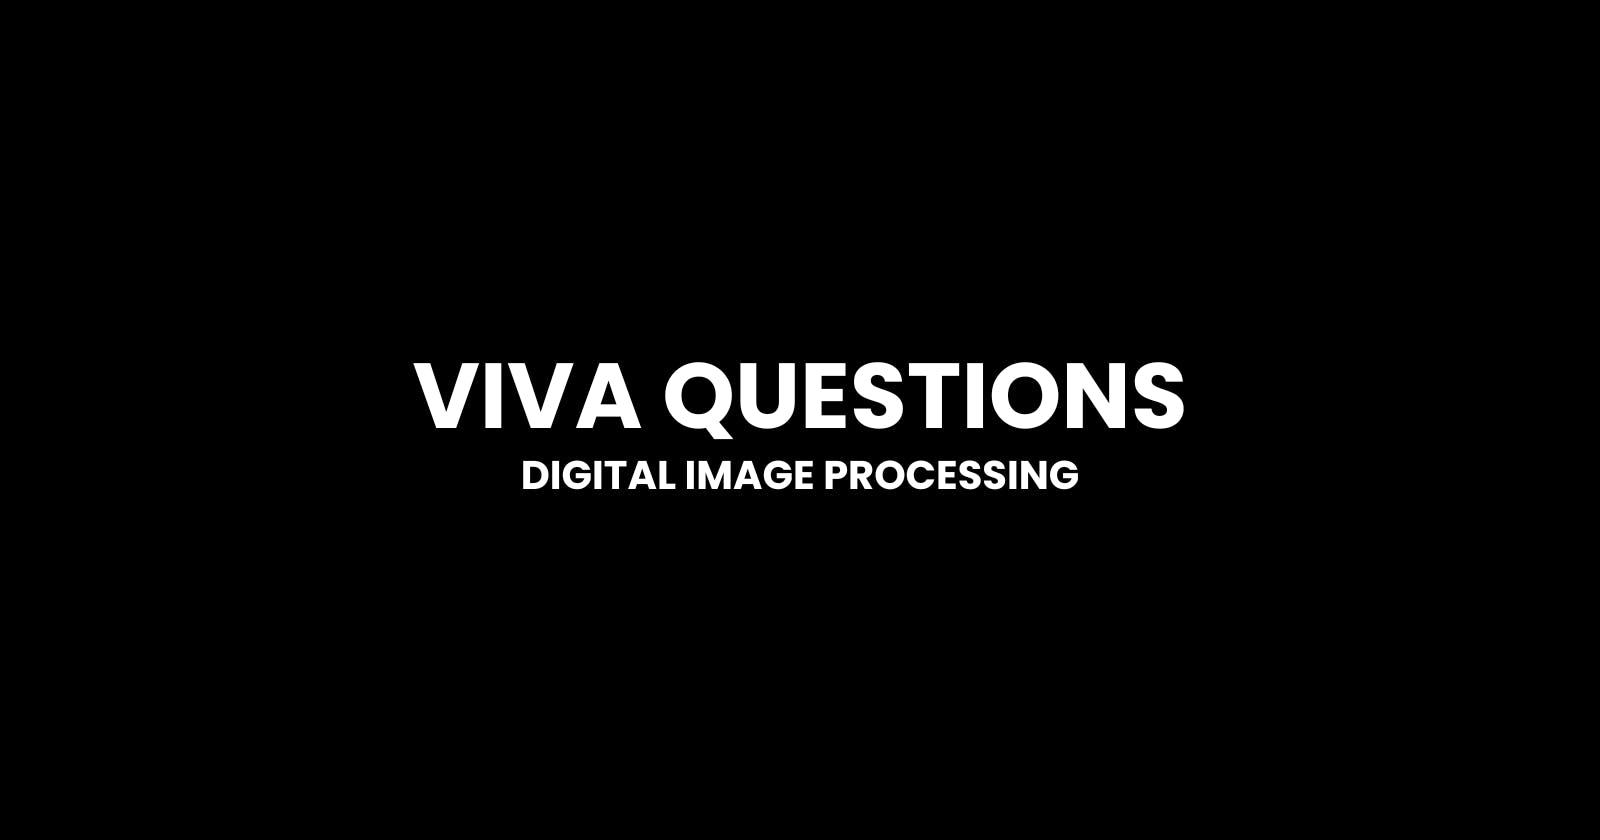 Digital Image Processing - Viva Questions